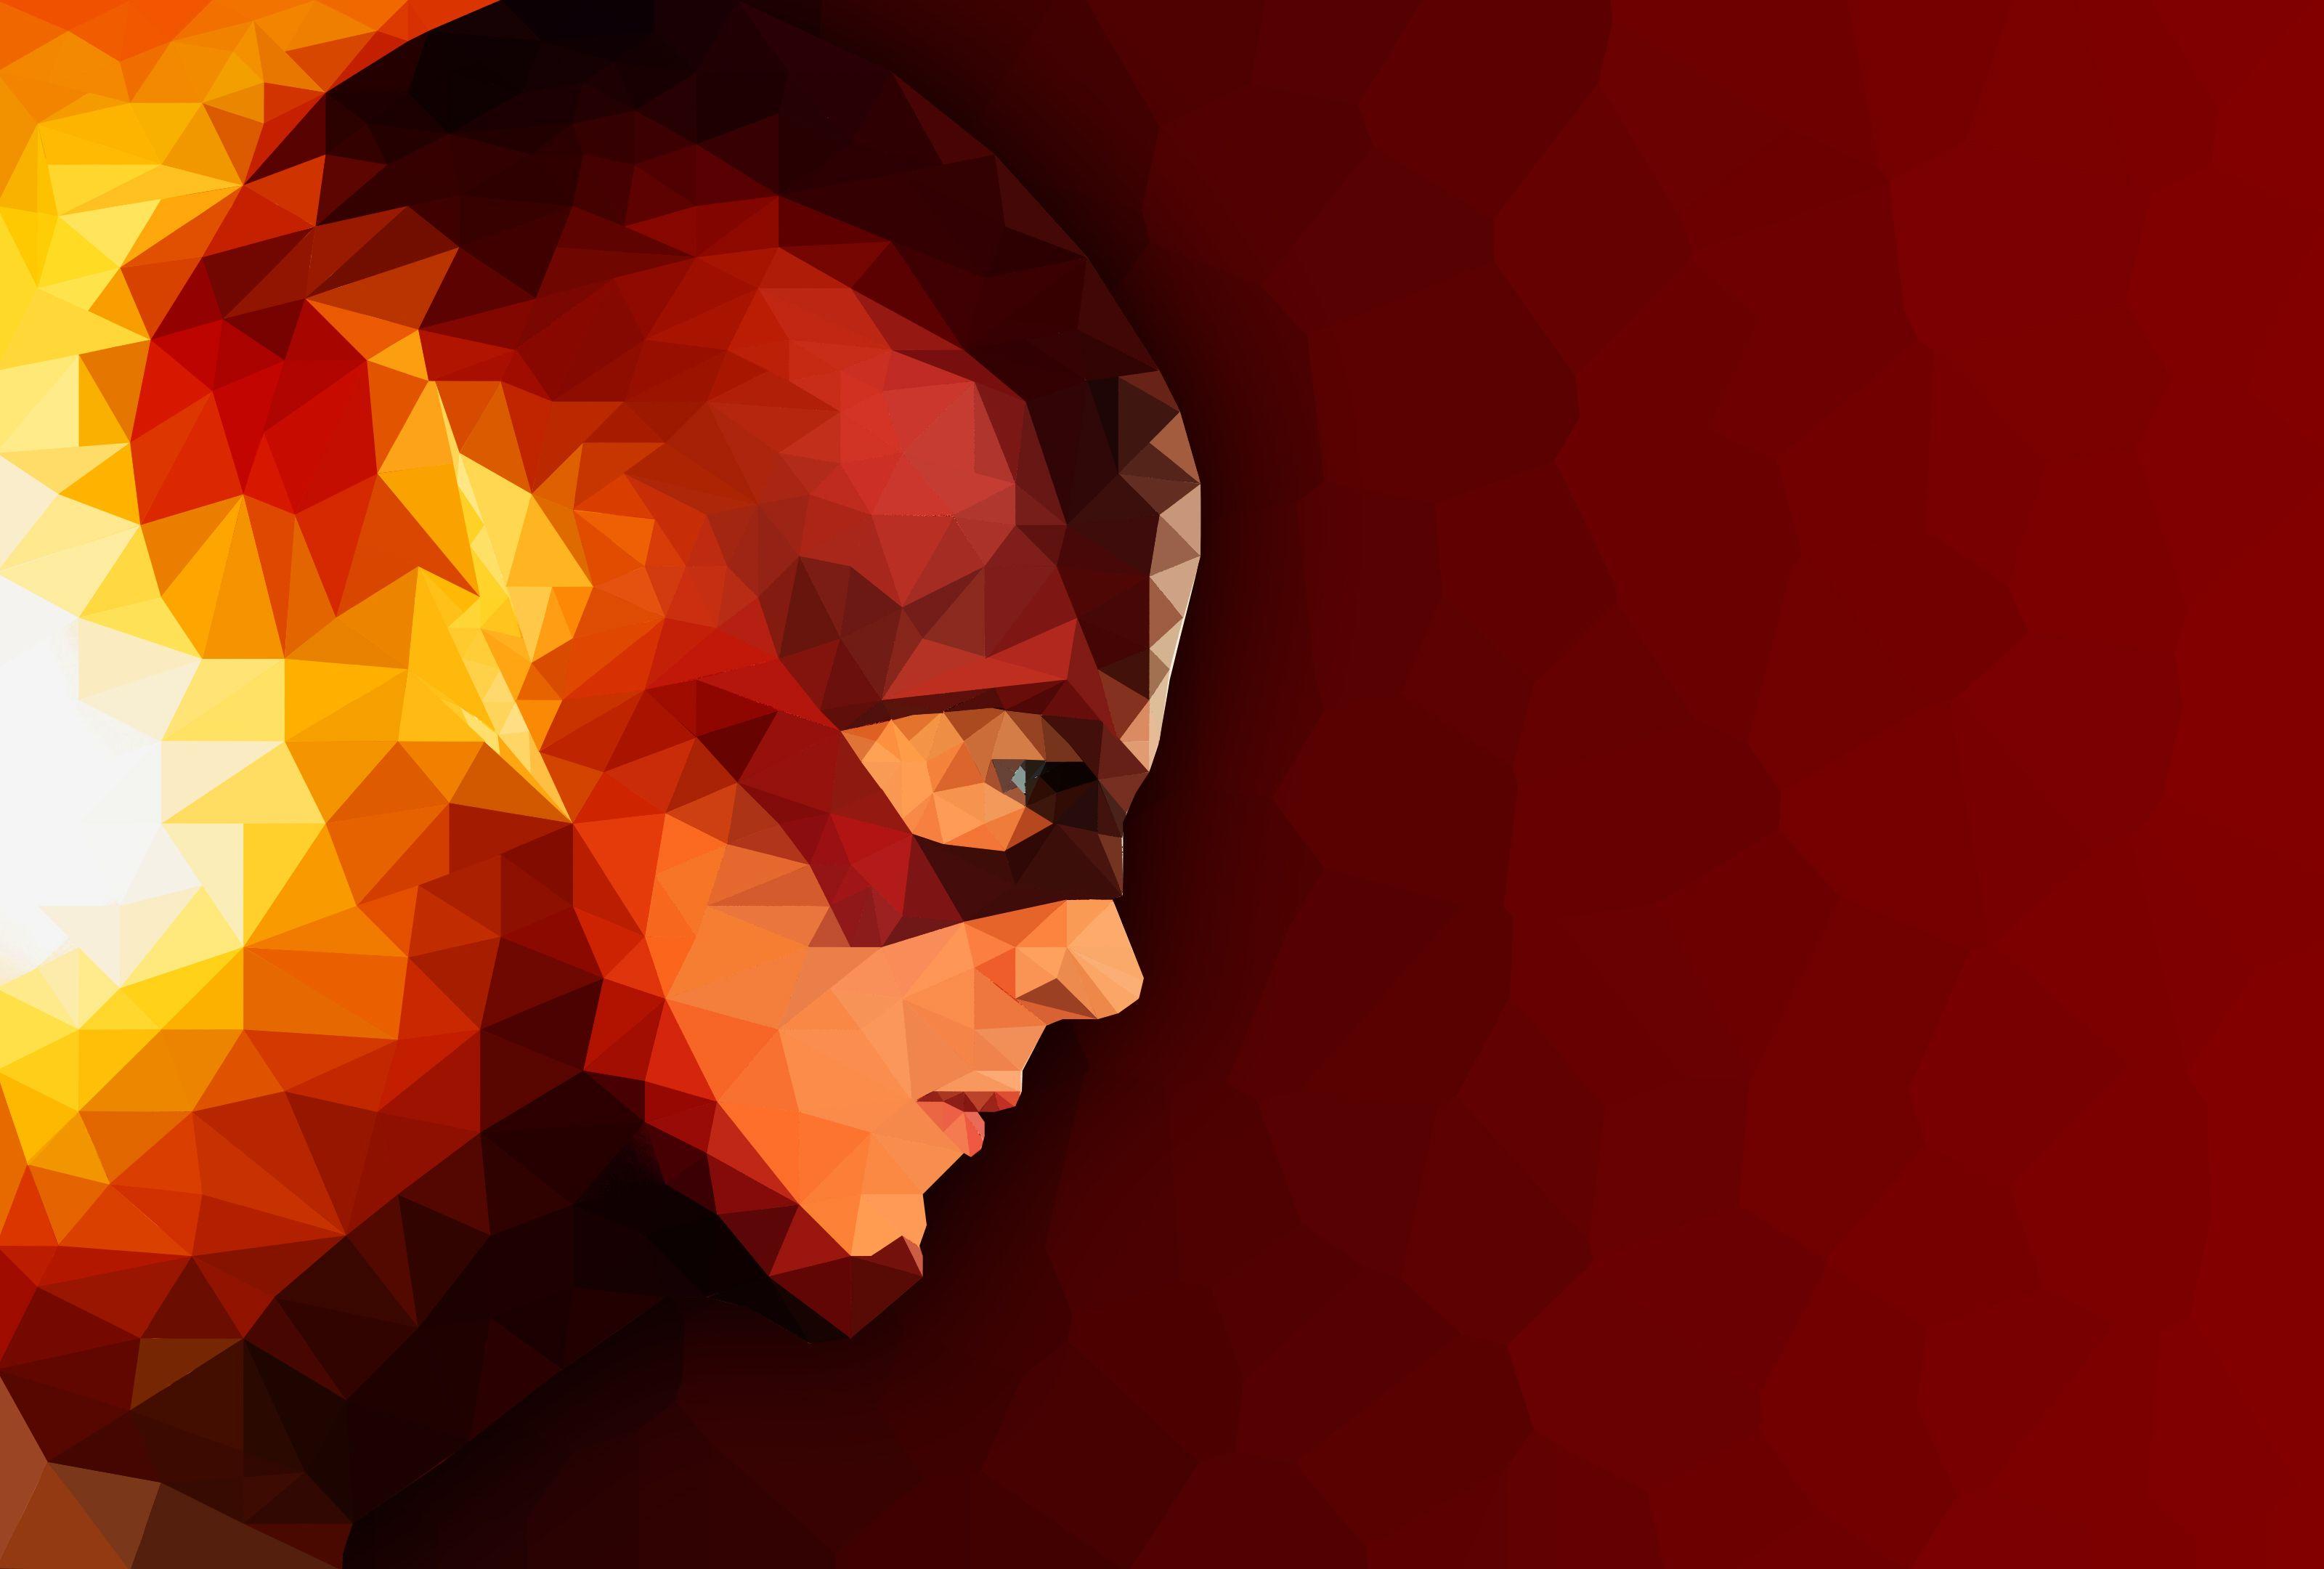 The Flash Abstract Artwork, HD Superheroes, 4k Wallpaper, Image